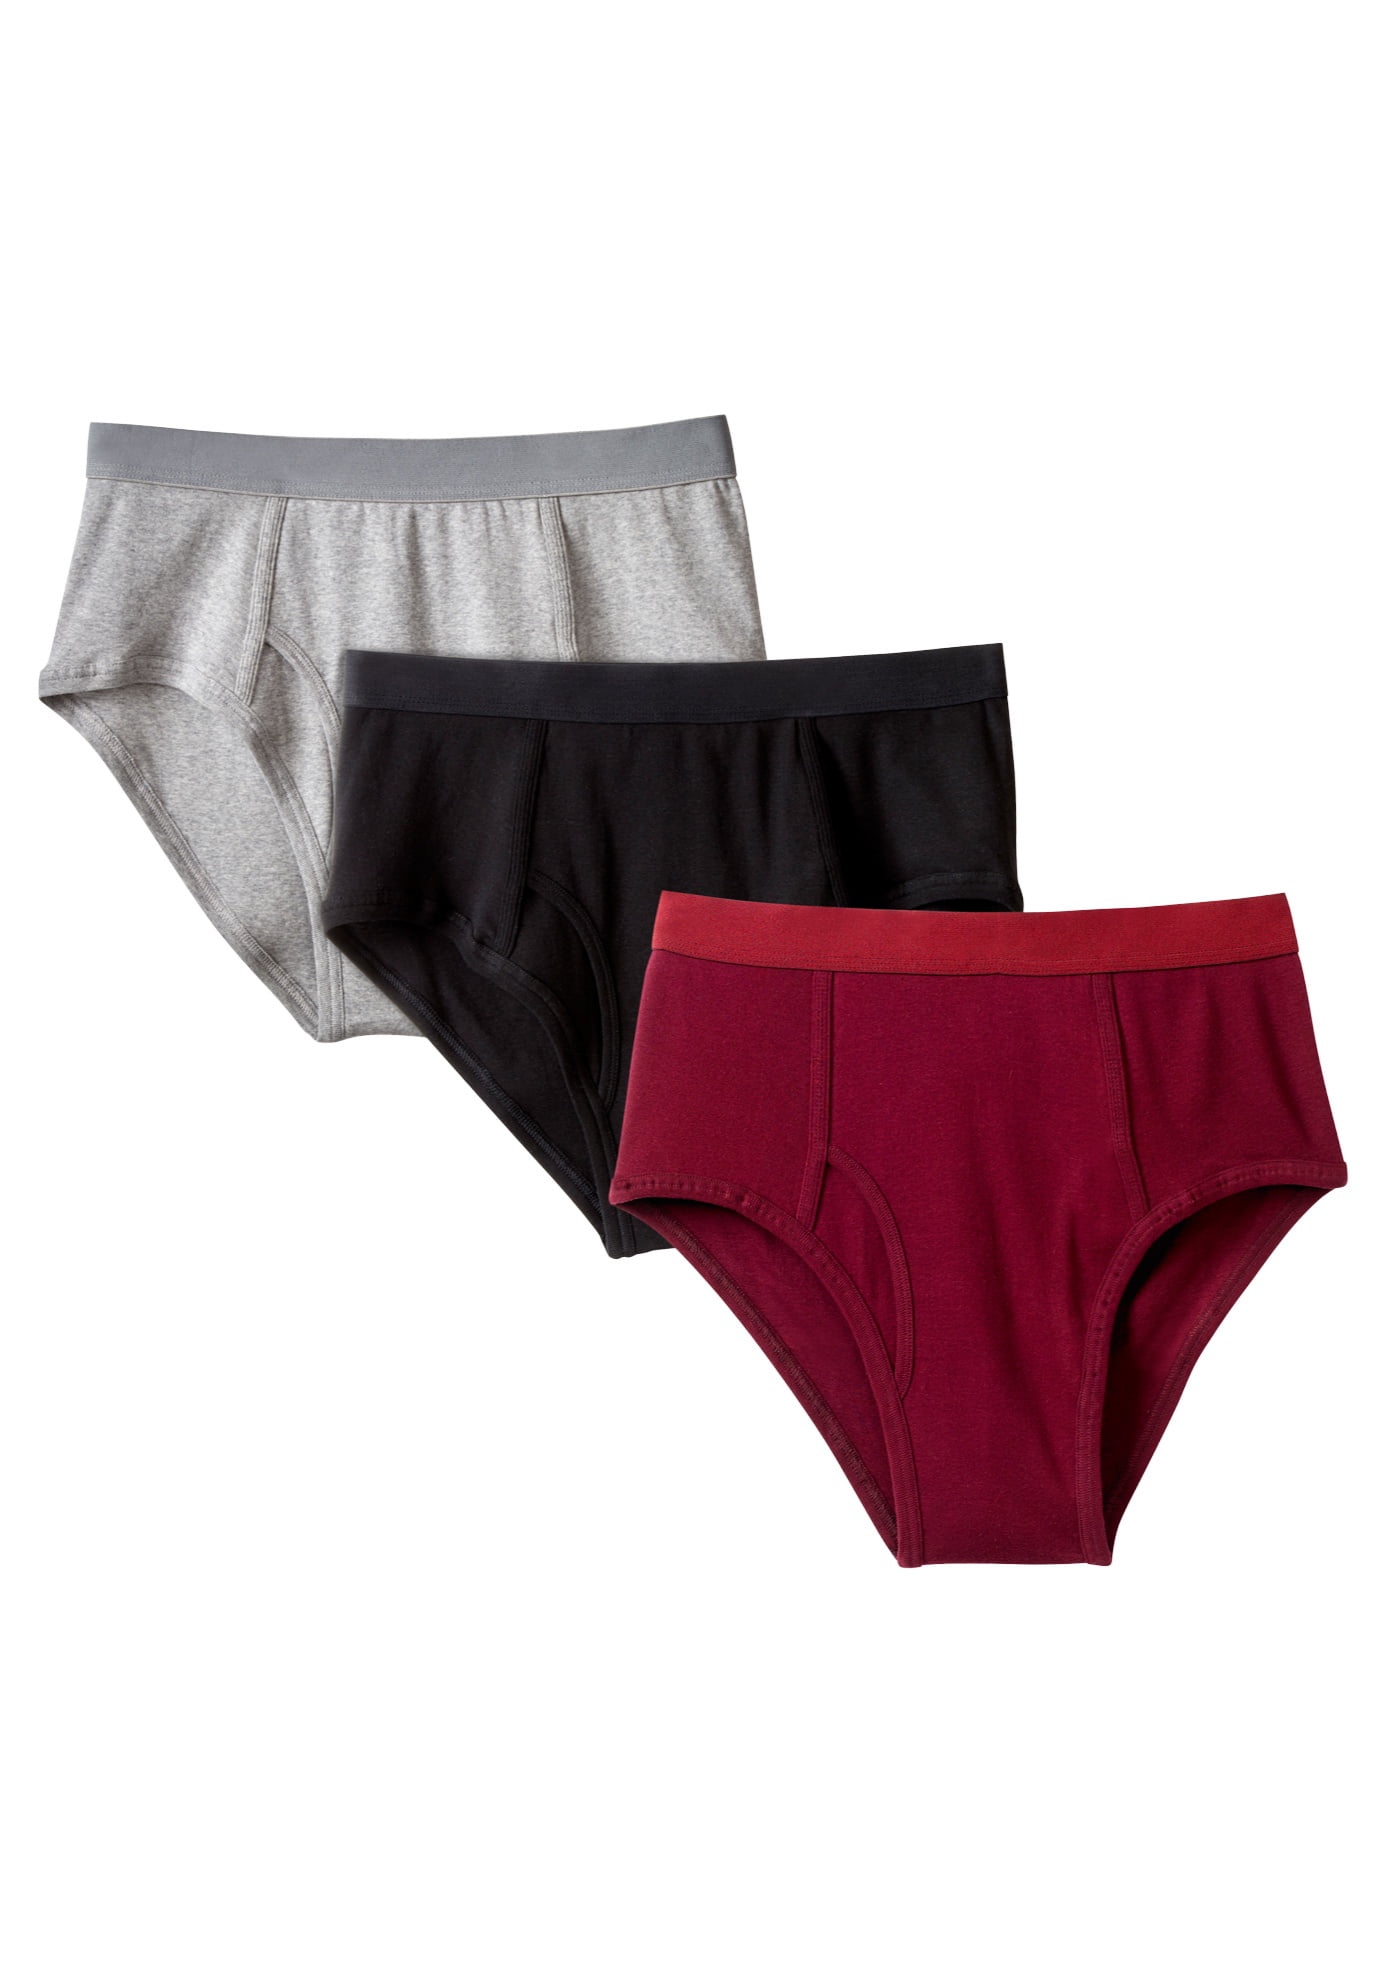 Kingsize Men's Big & Tall Classic Cotton Briefs 3-Pack Underwear